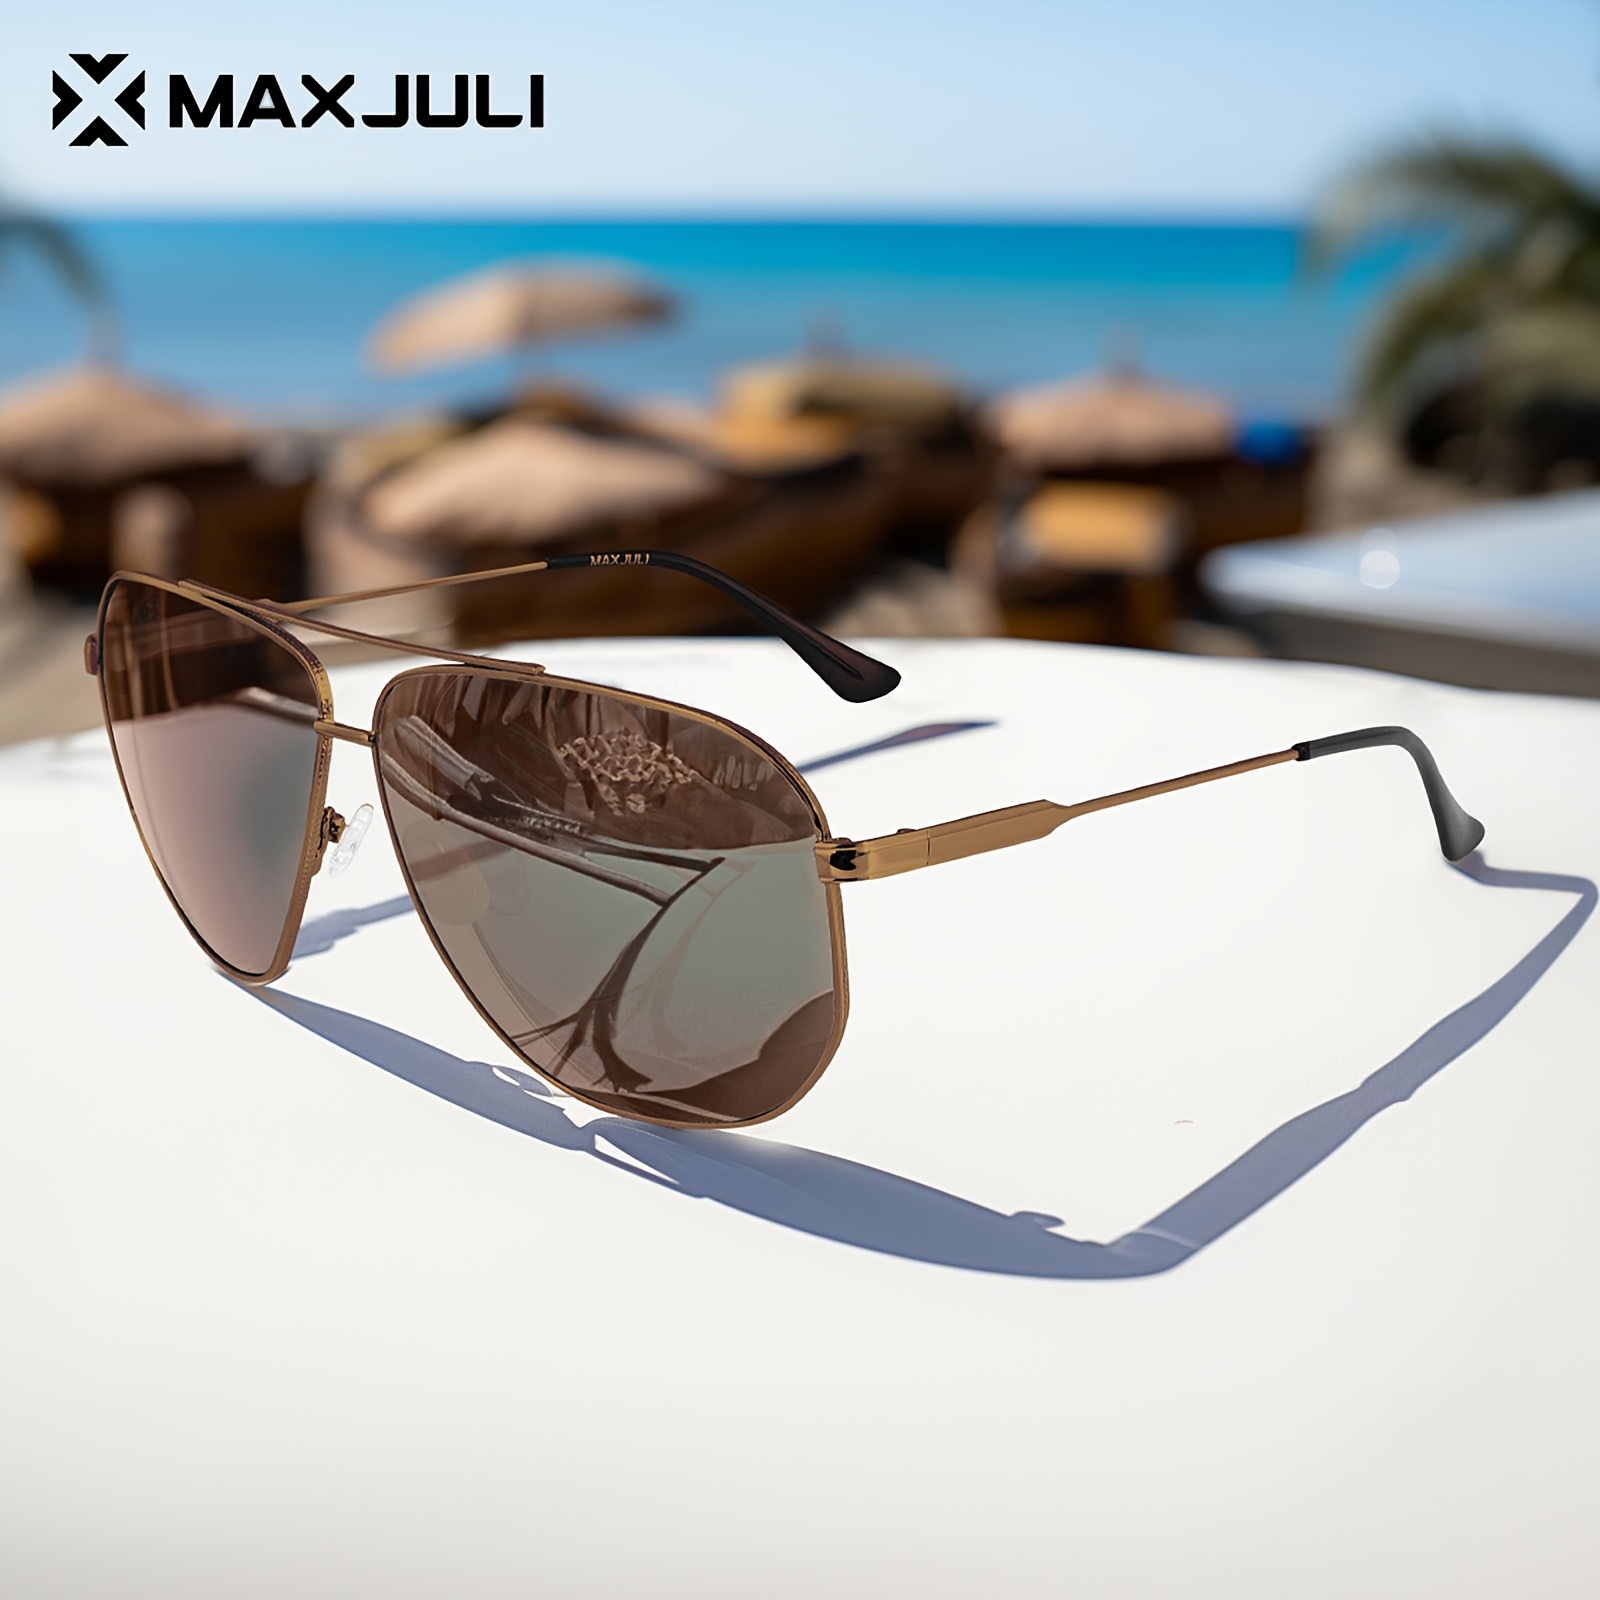 MAXJULI XXL Size Extra Large Polarized Big Metal Frame Glasses, 153mm For  Big Wide Heads Men